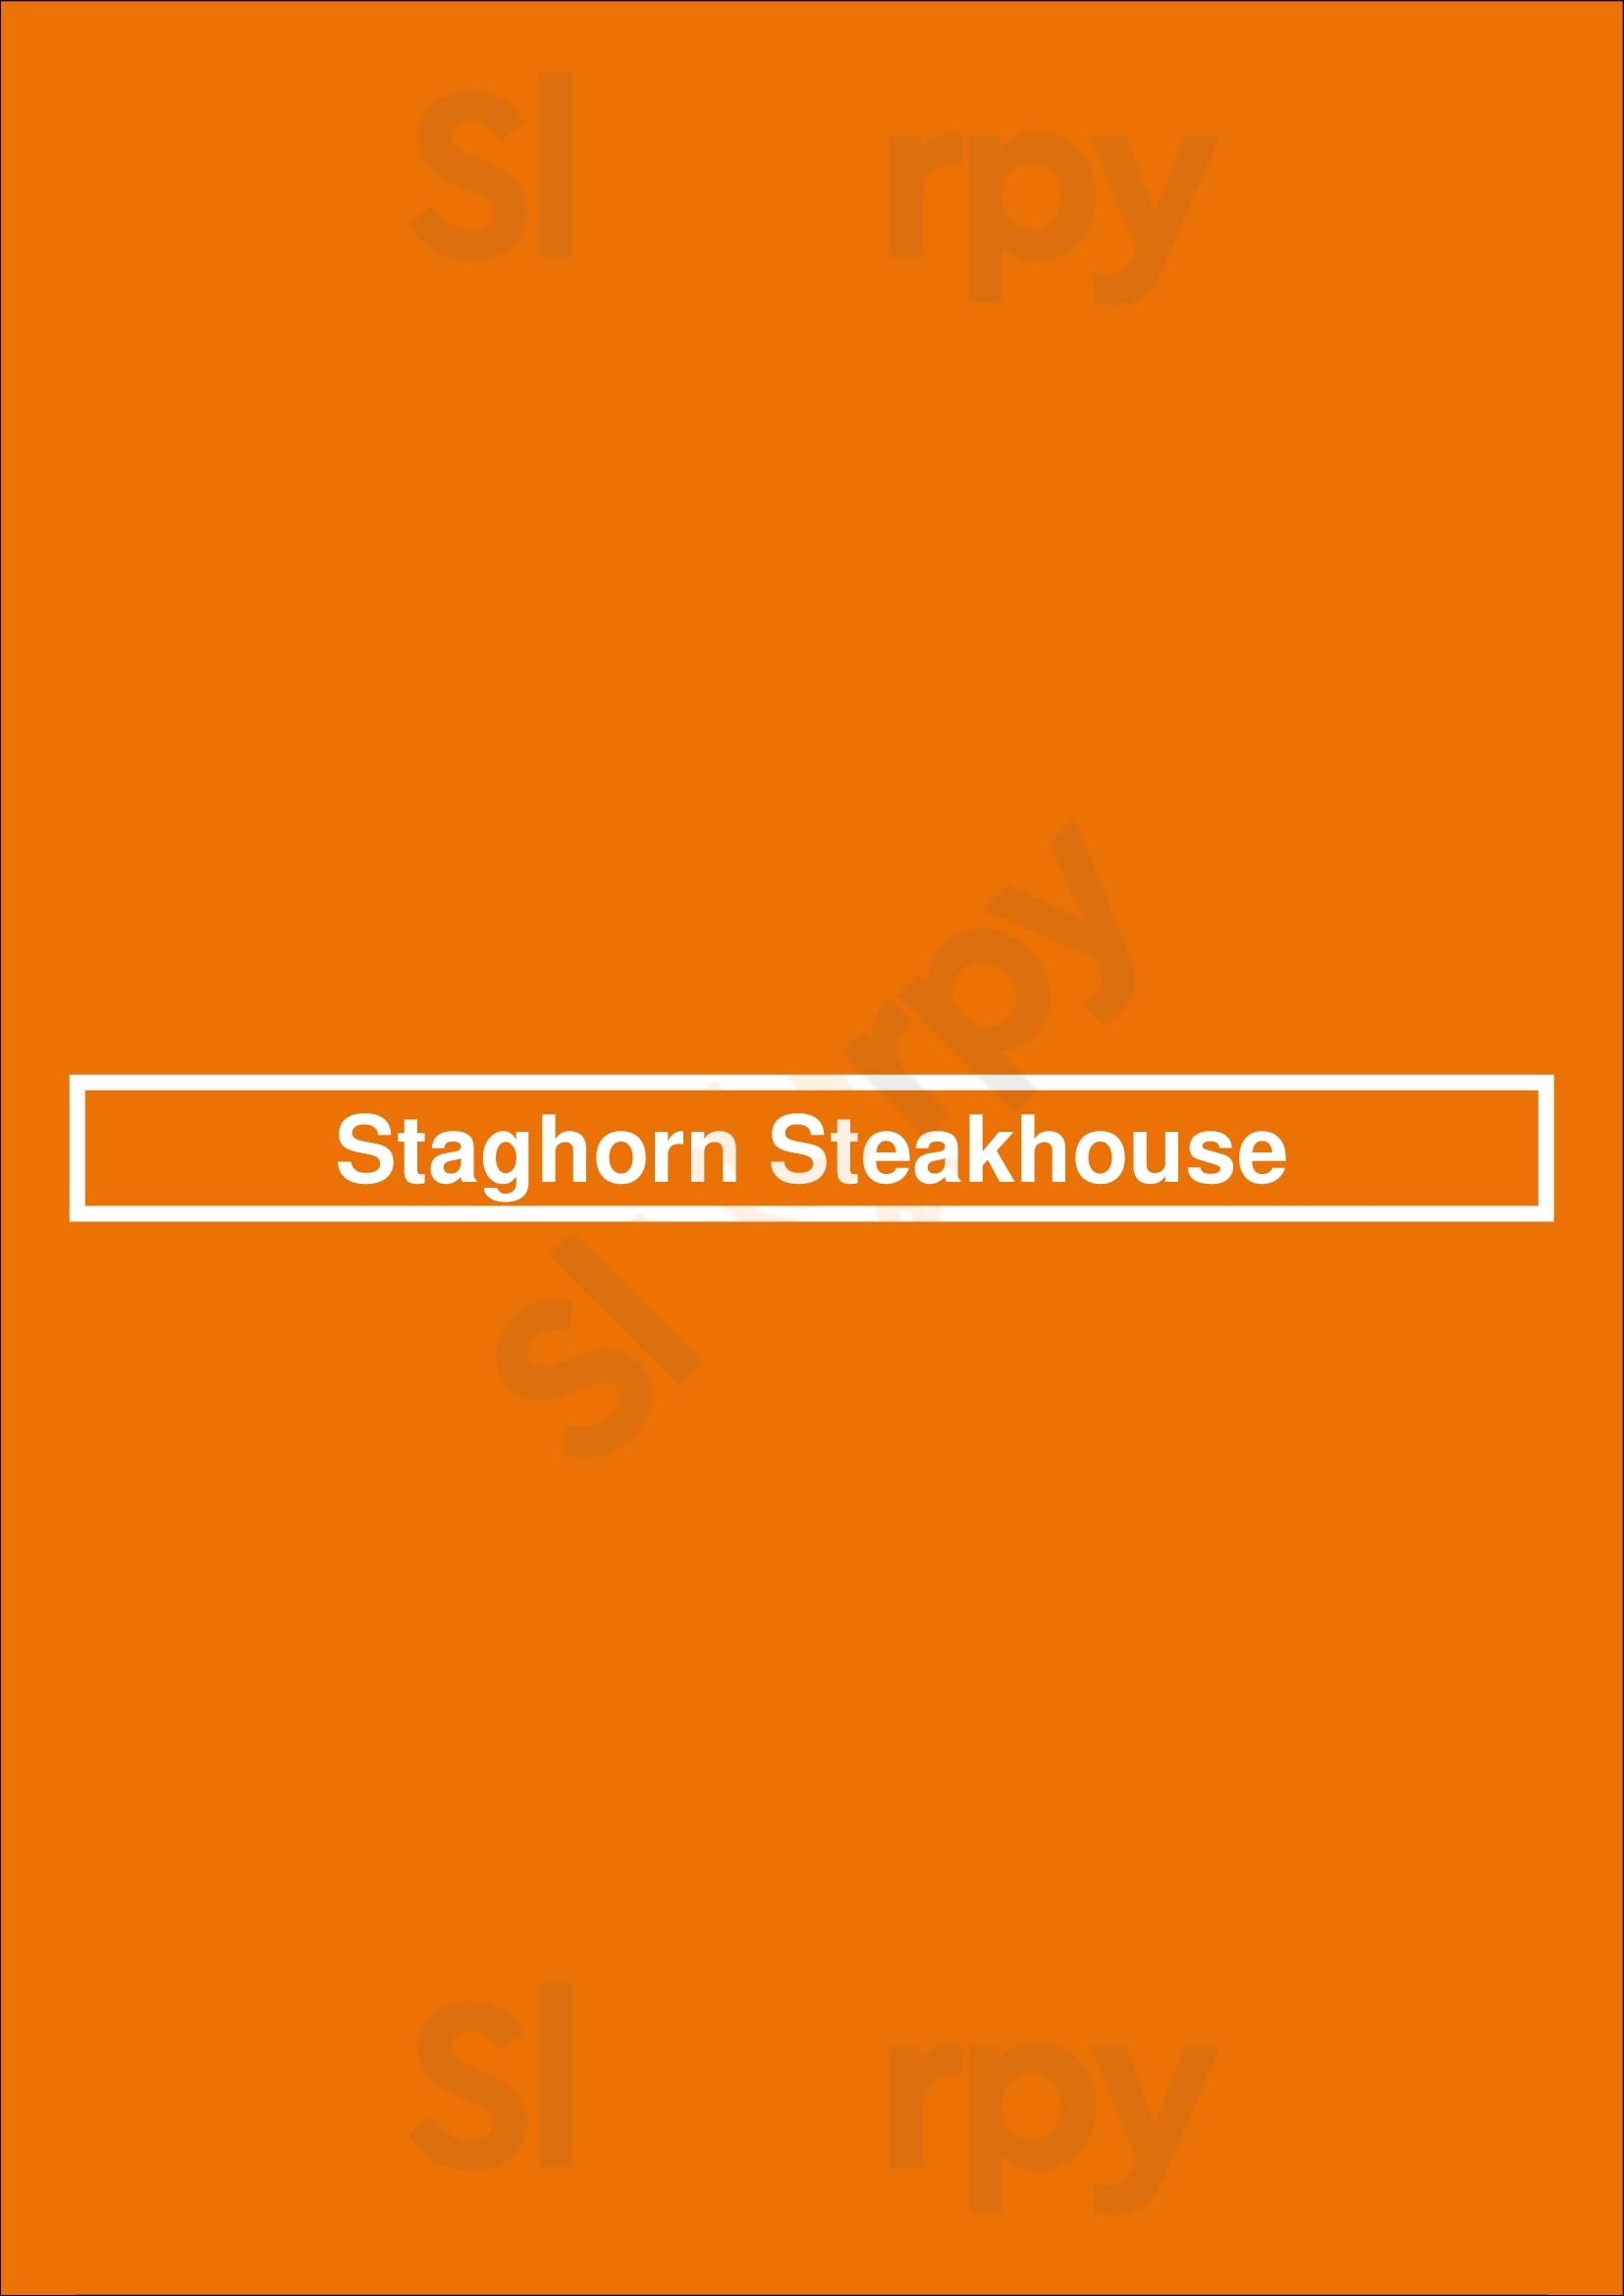 Staghorn Steakhouse New York City Menu - 1